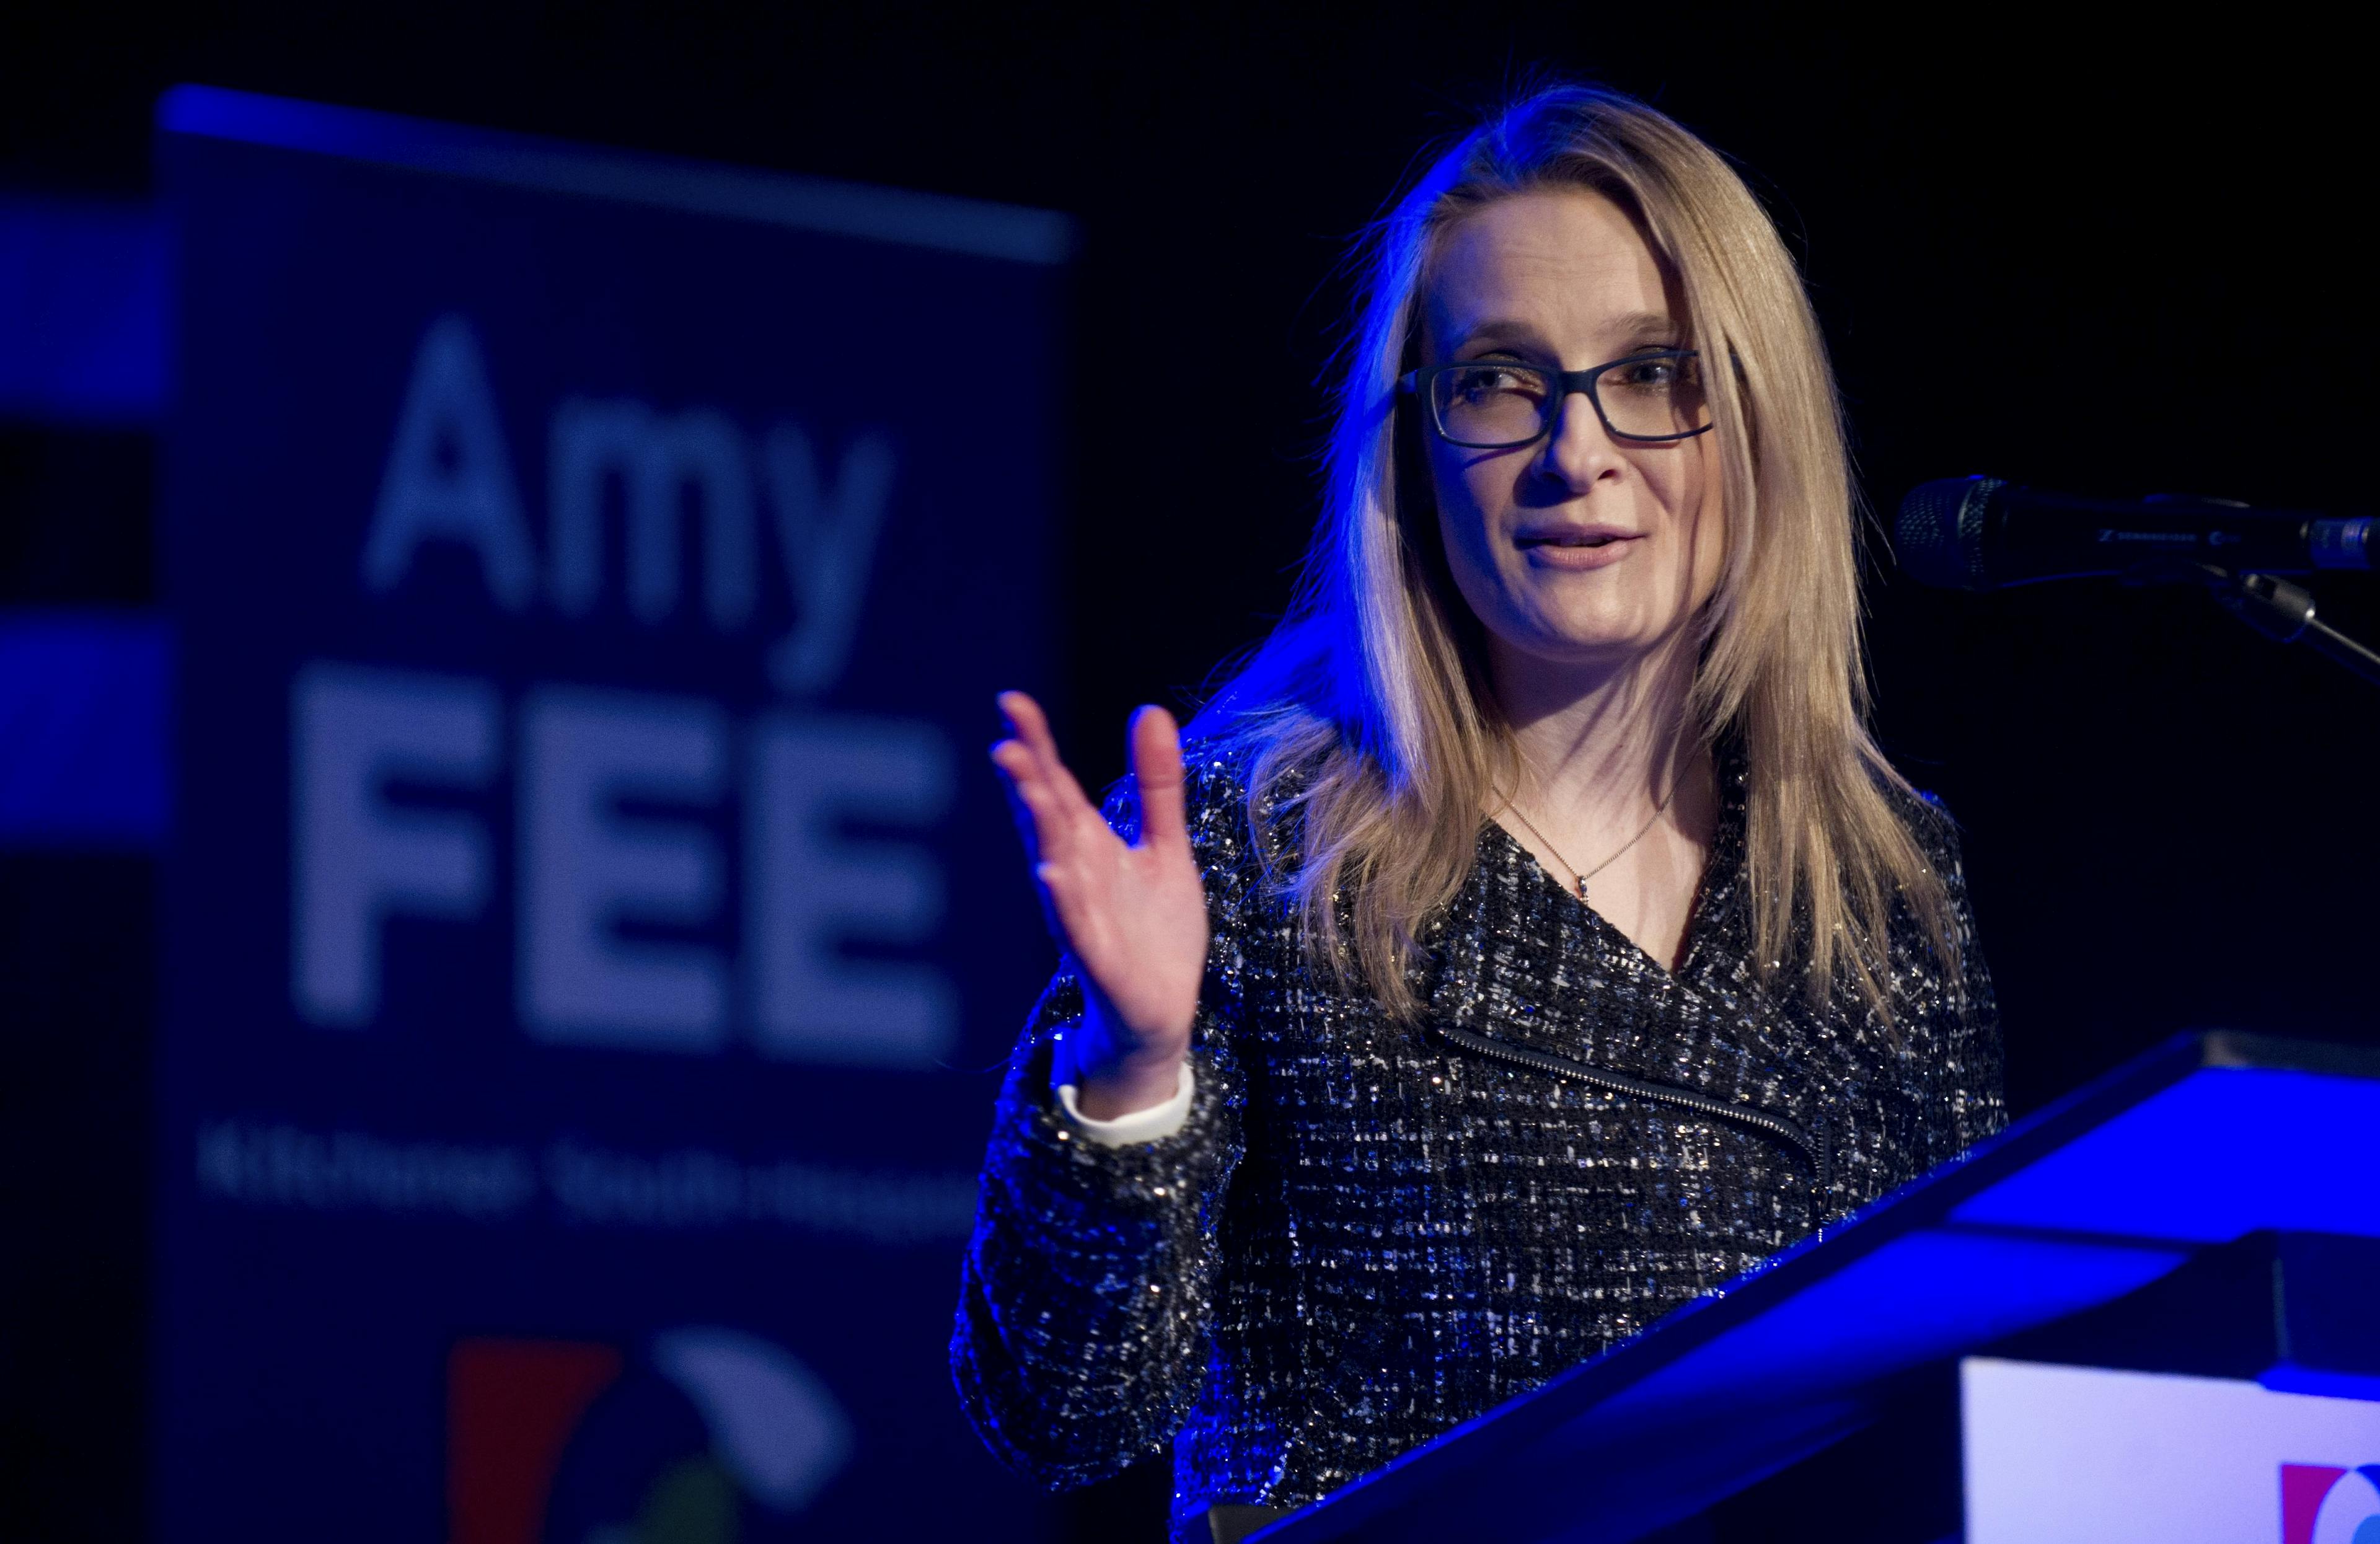 PC MPP Amy Fee announces she won’t seek re-election, cites family reasons